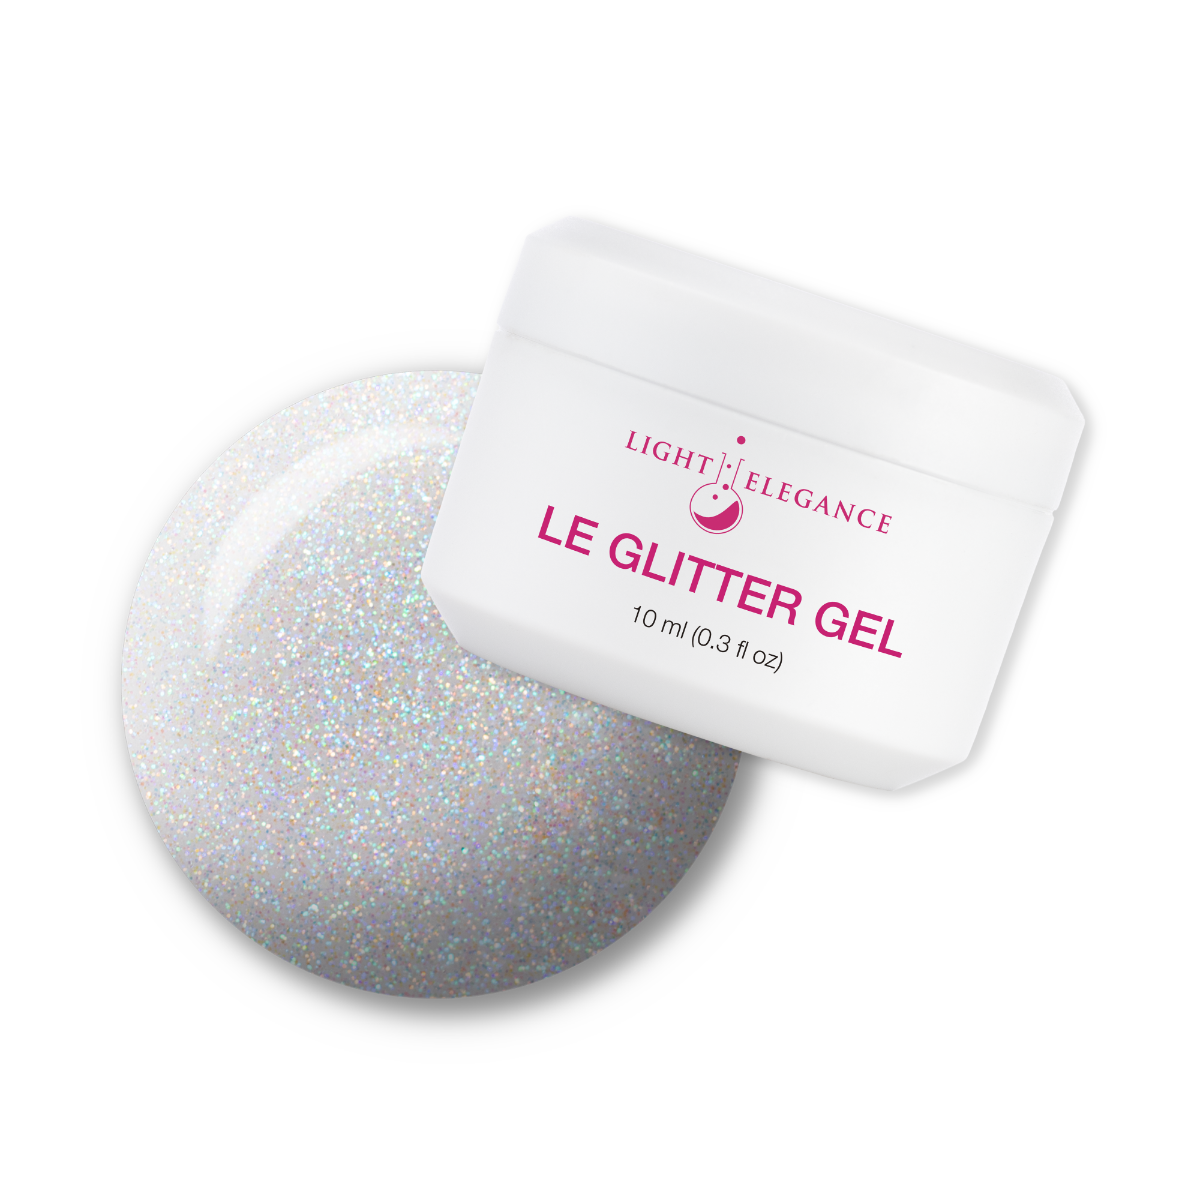 Light Elegance Glitter Gel - Crystal :: New Packaging